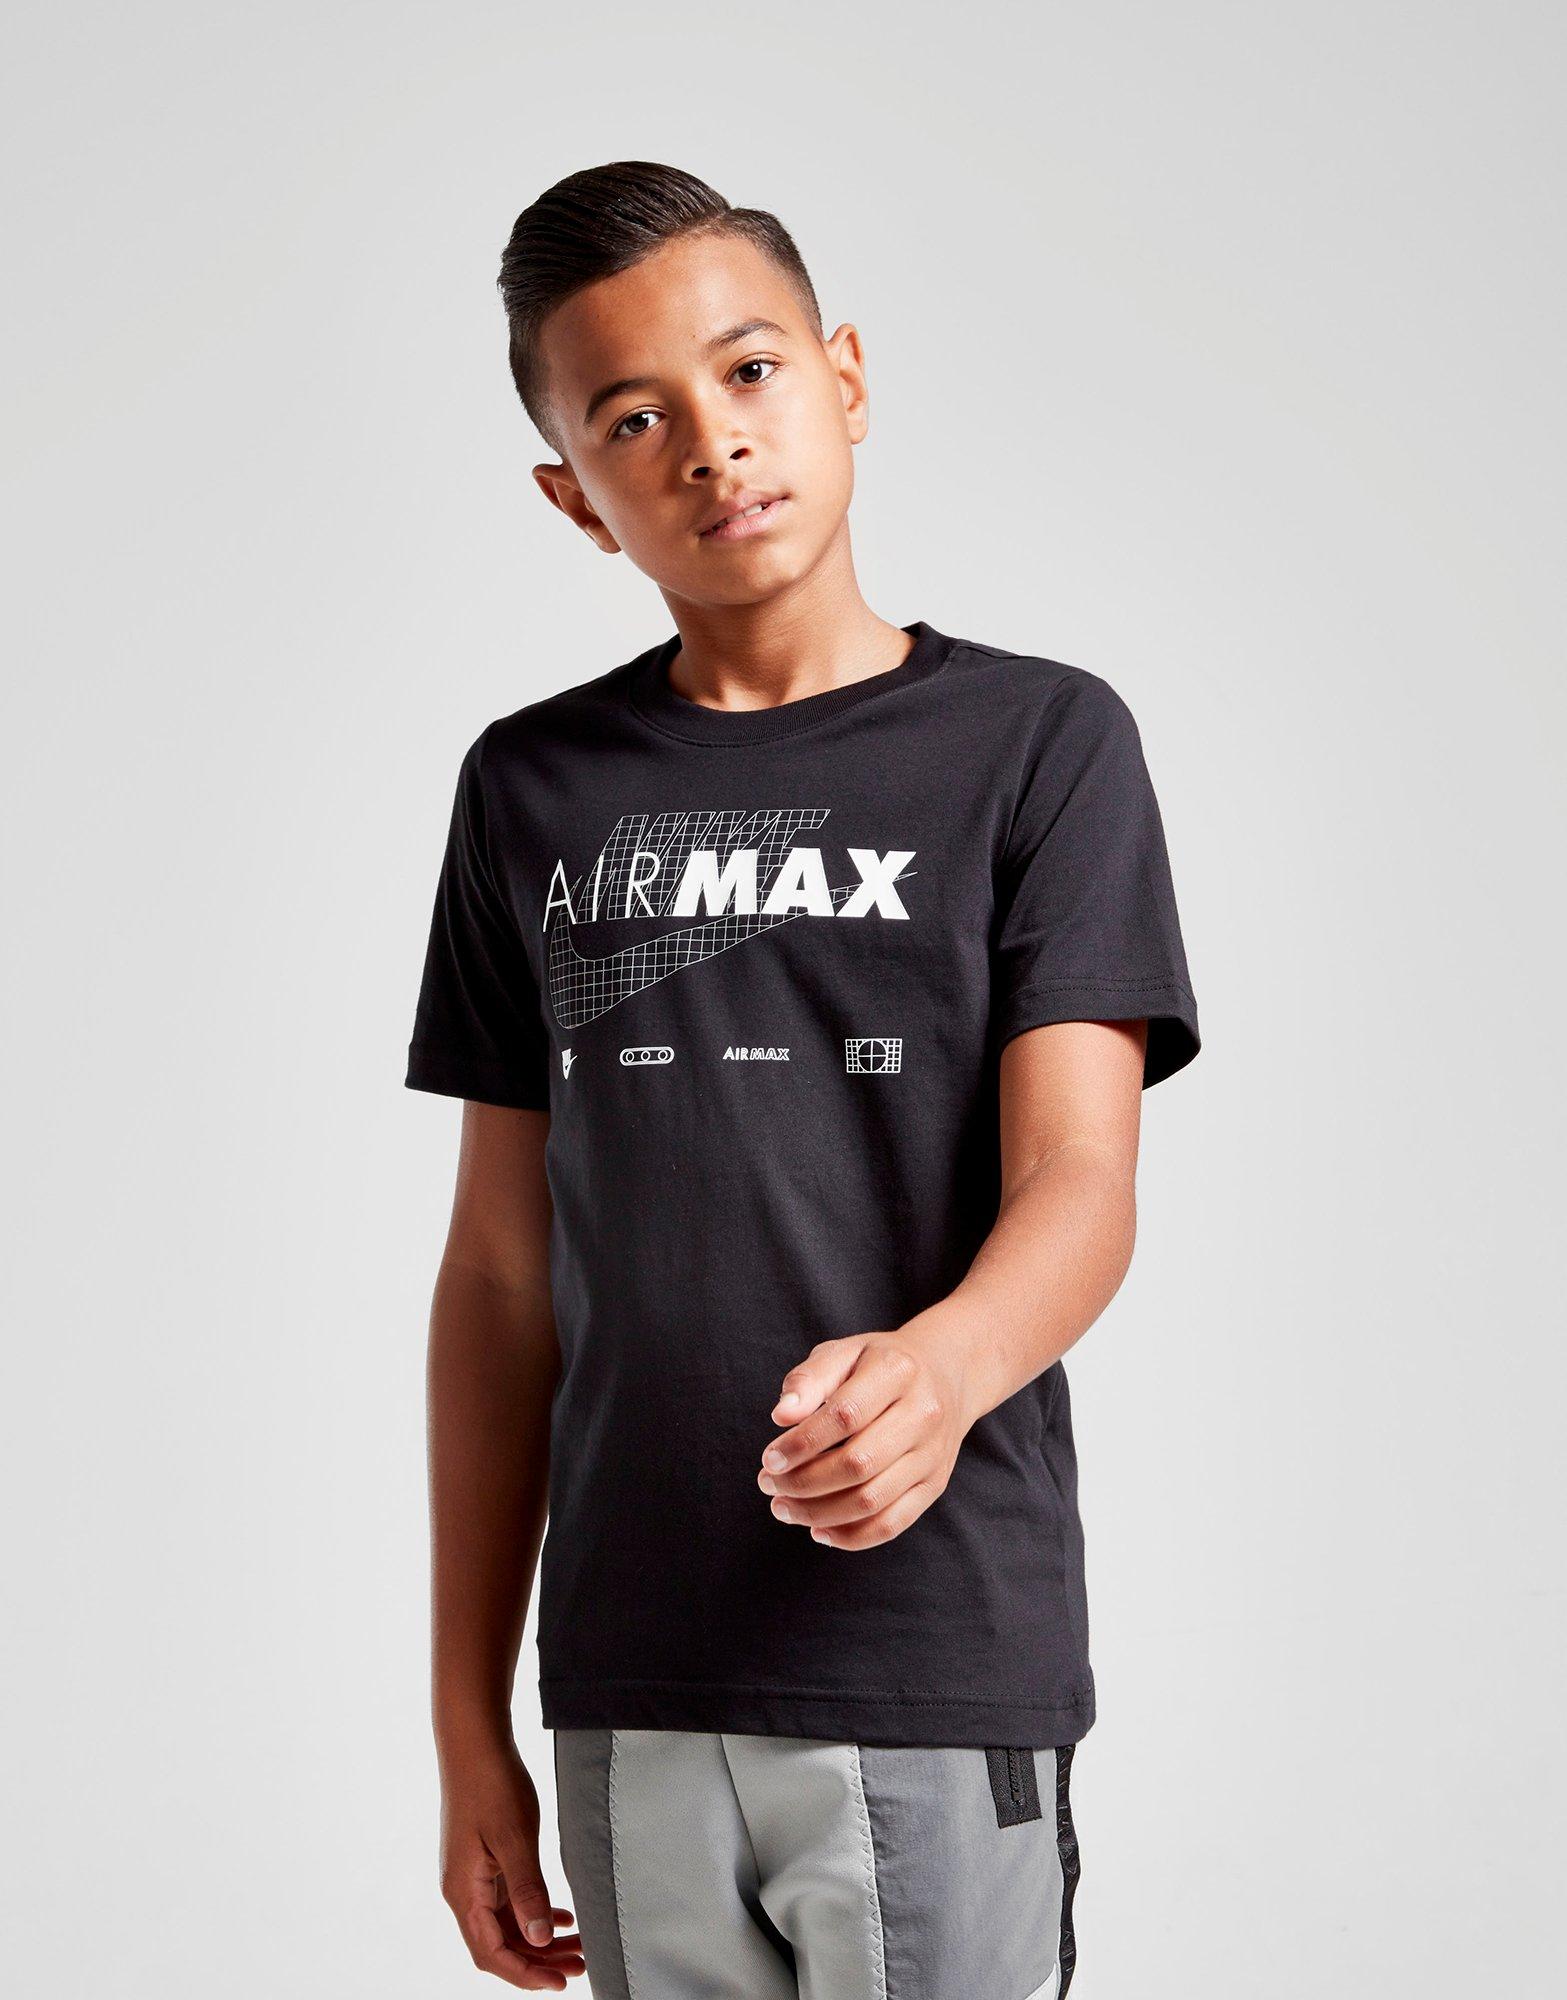 air max tee shirt